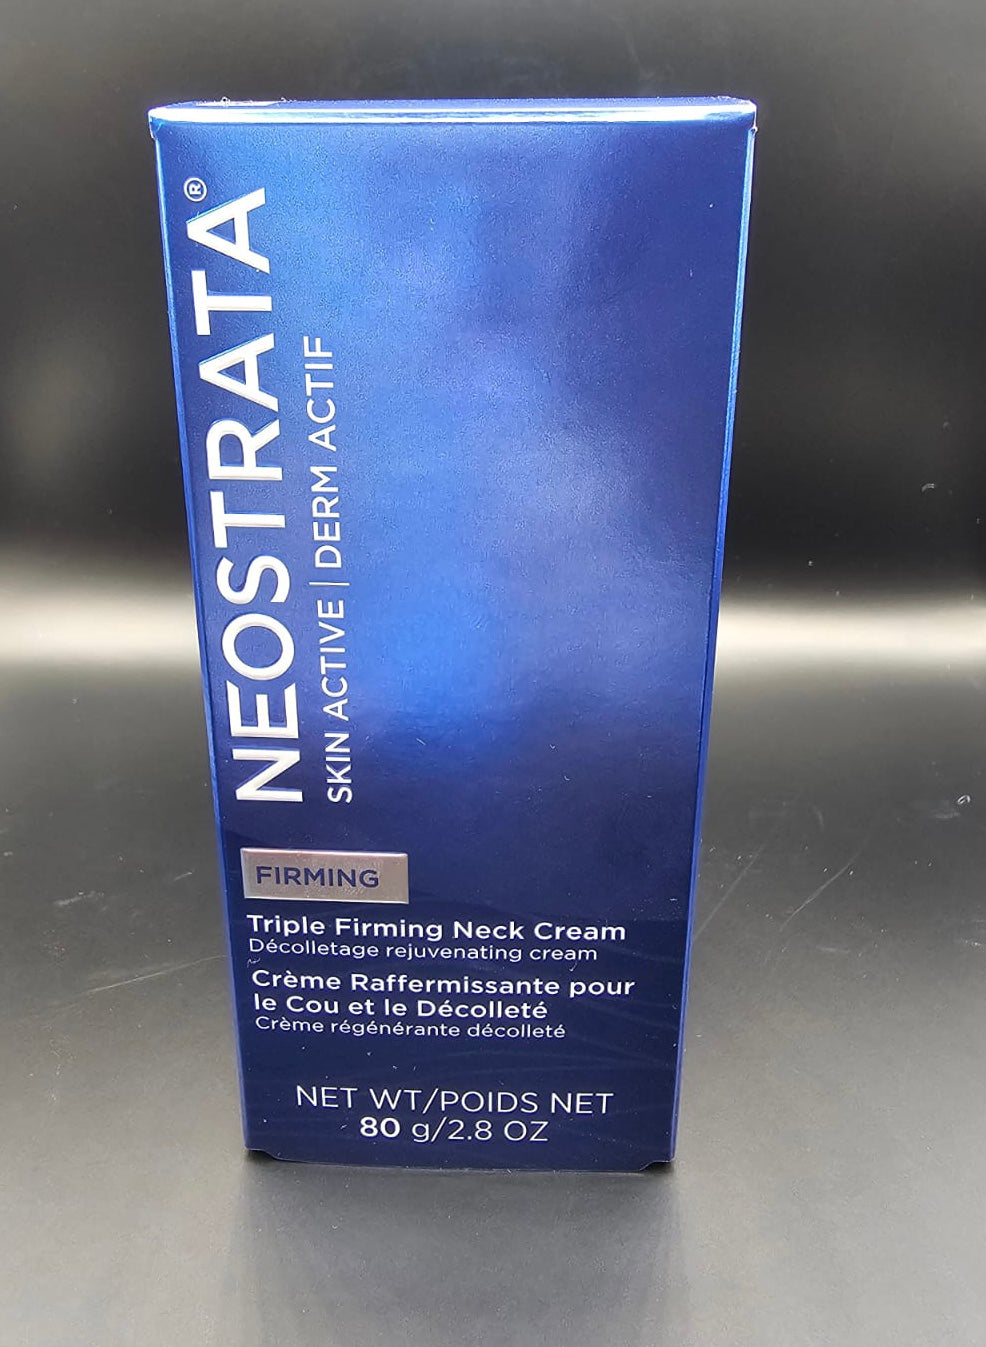 Neostrata firming neck and neckline cream